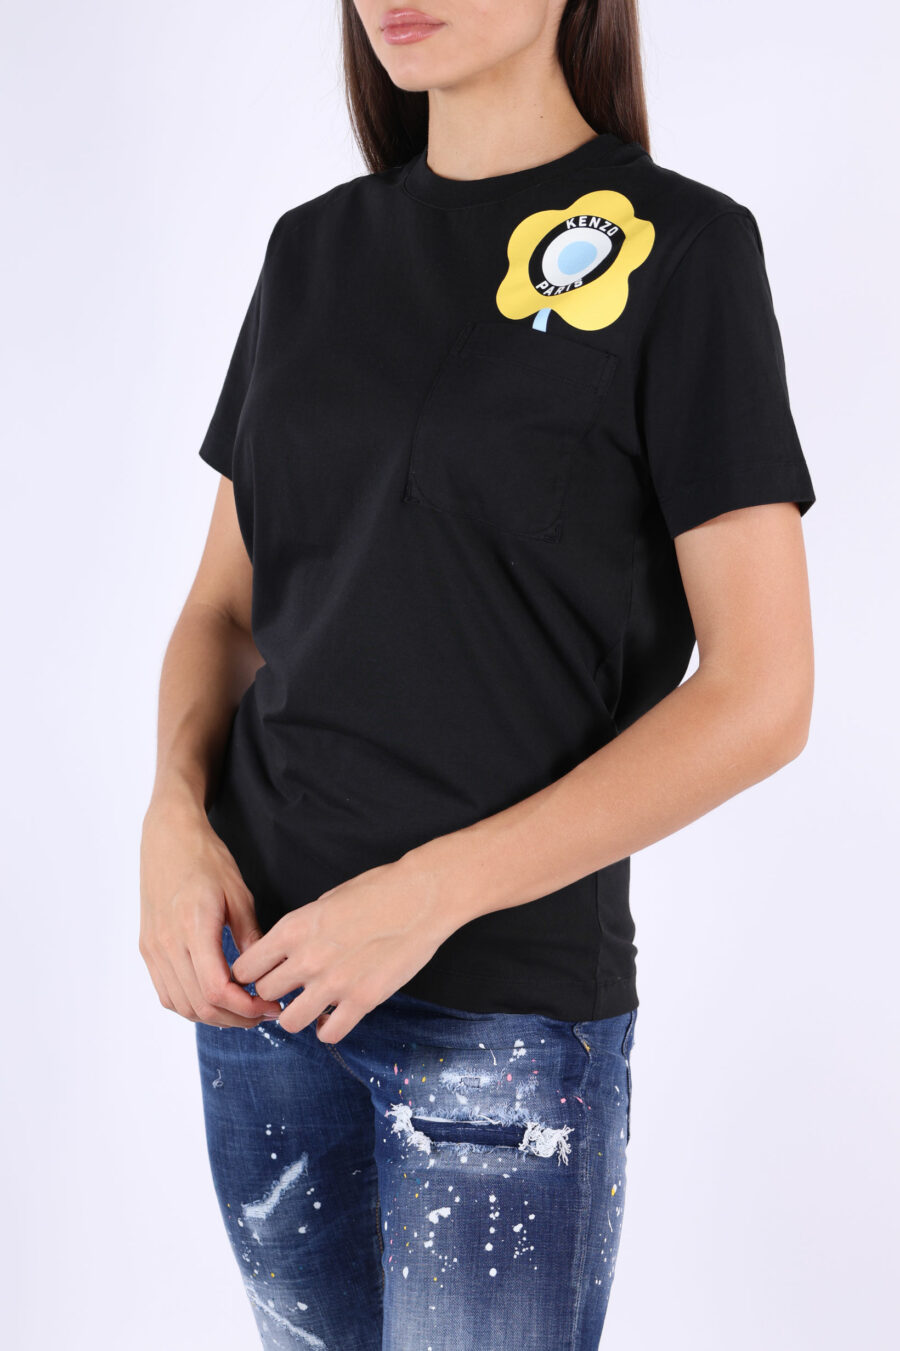 T-shirt noir avec logo jaune "kenzo target" - 361223054662202017